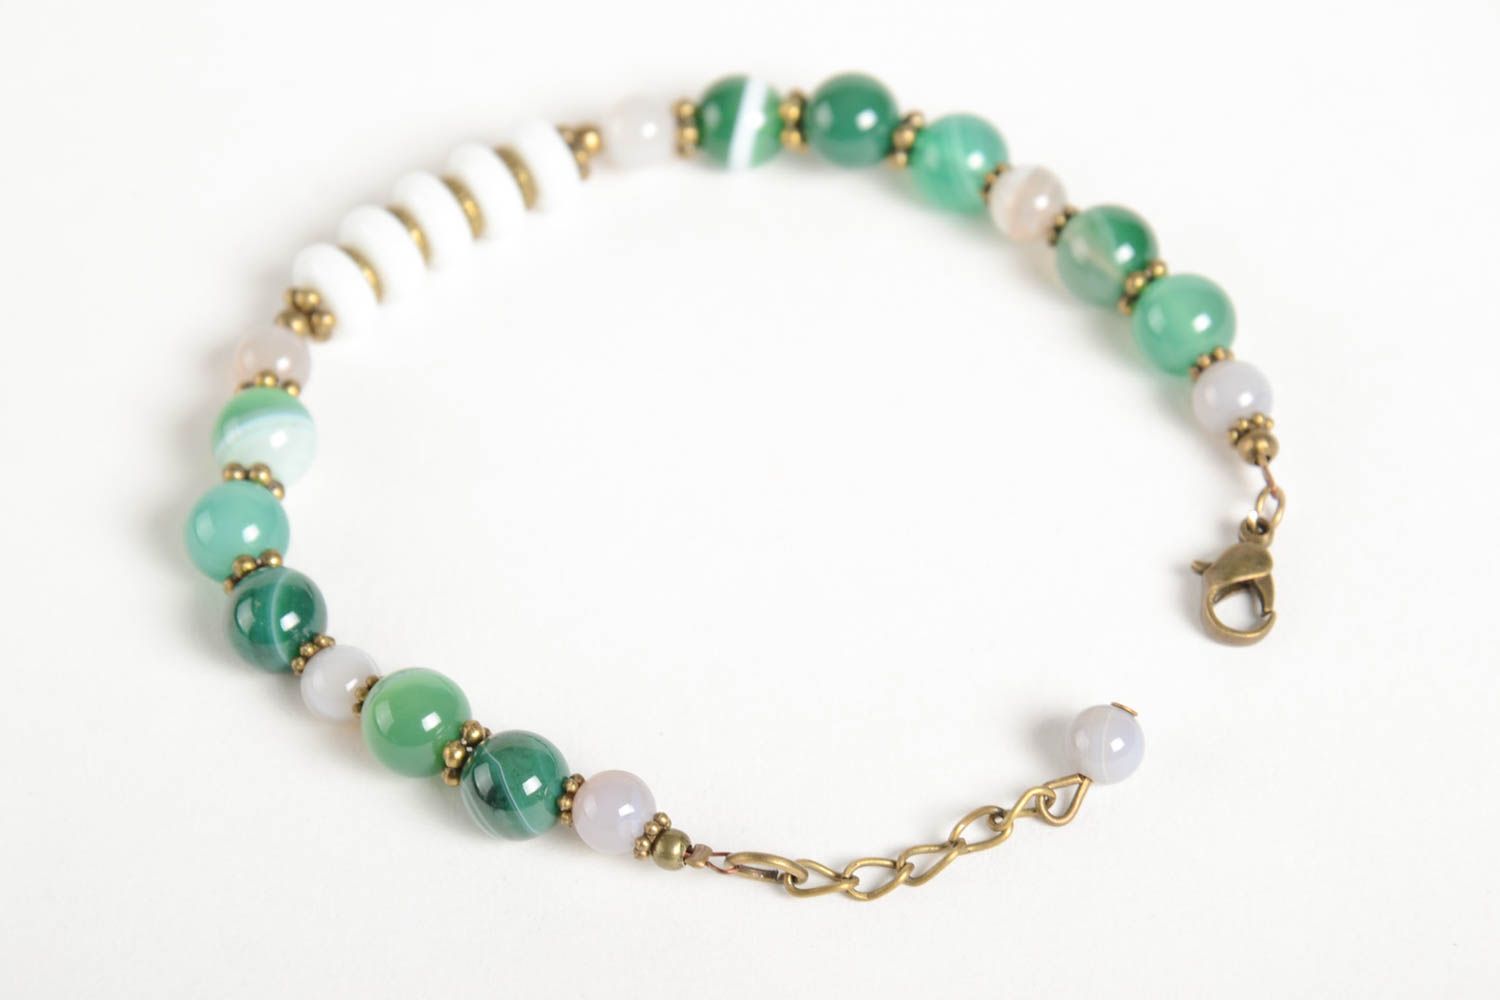 Beautiful handmade stone bracelet artisan jewelry designs gifts for her photo 3